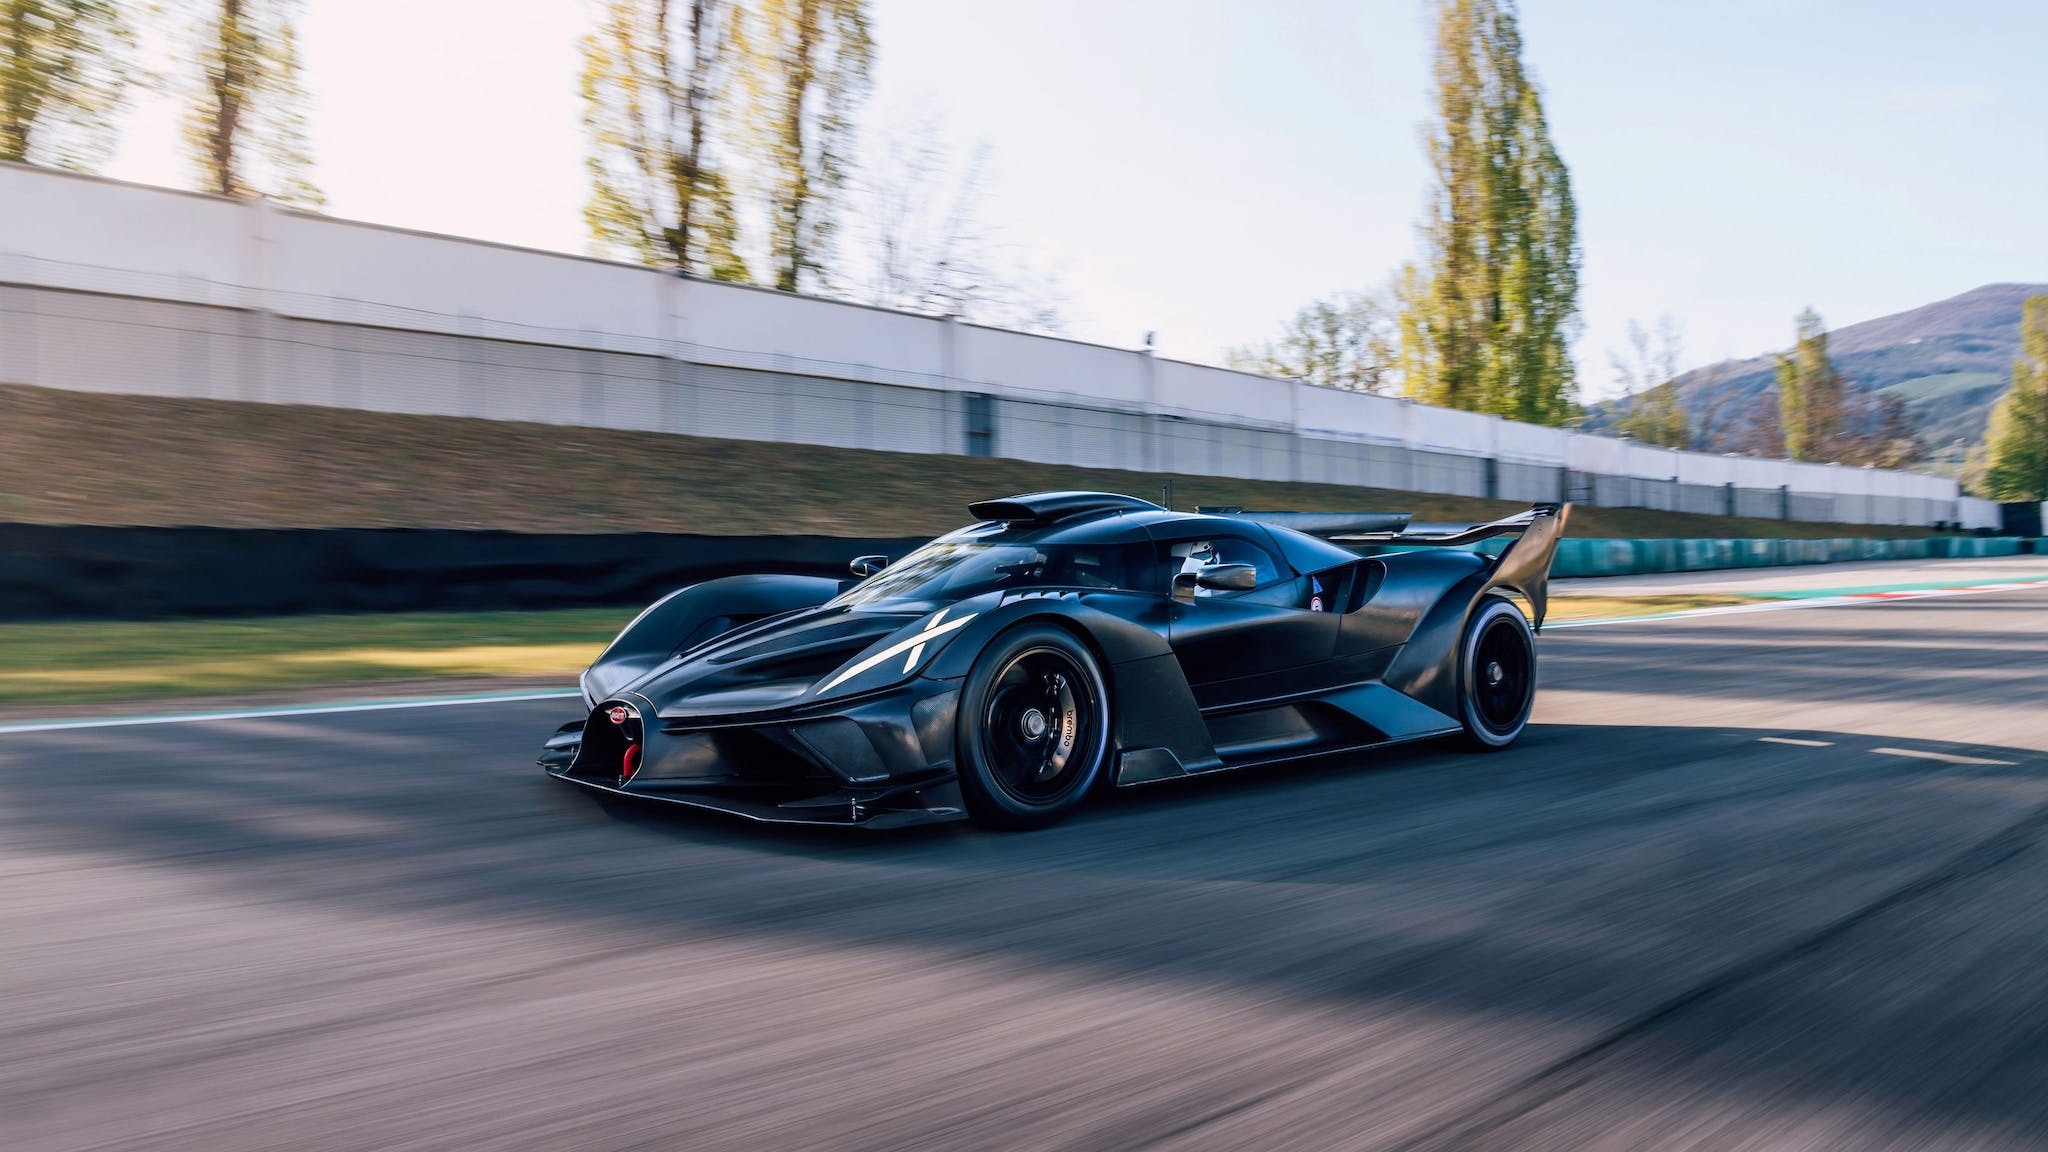 Bugatti’s latest hypercar will hit the roads next year